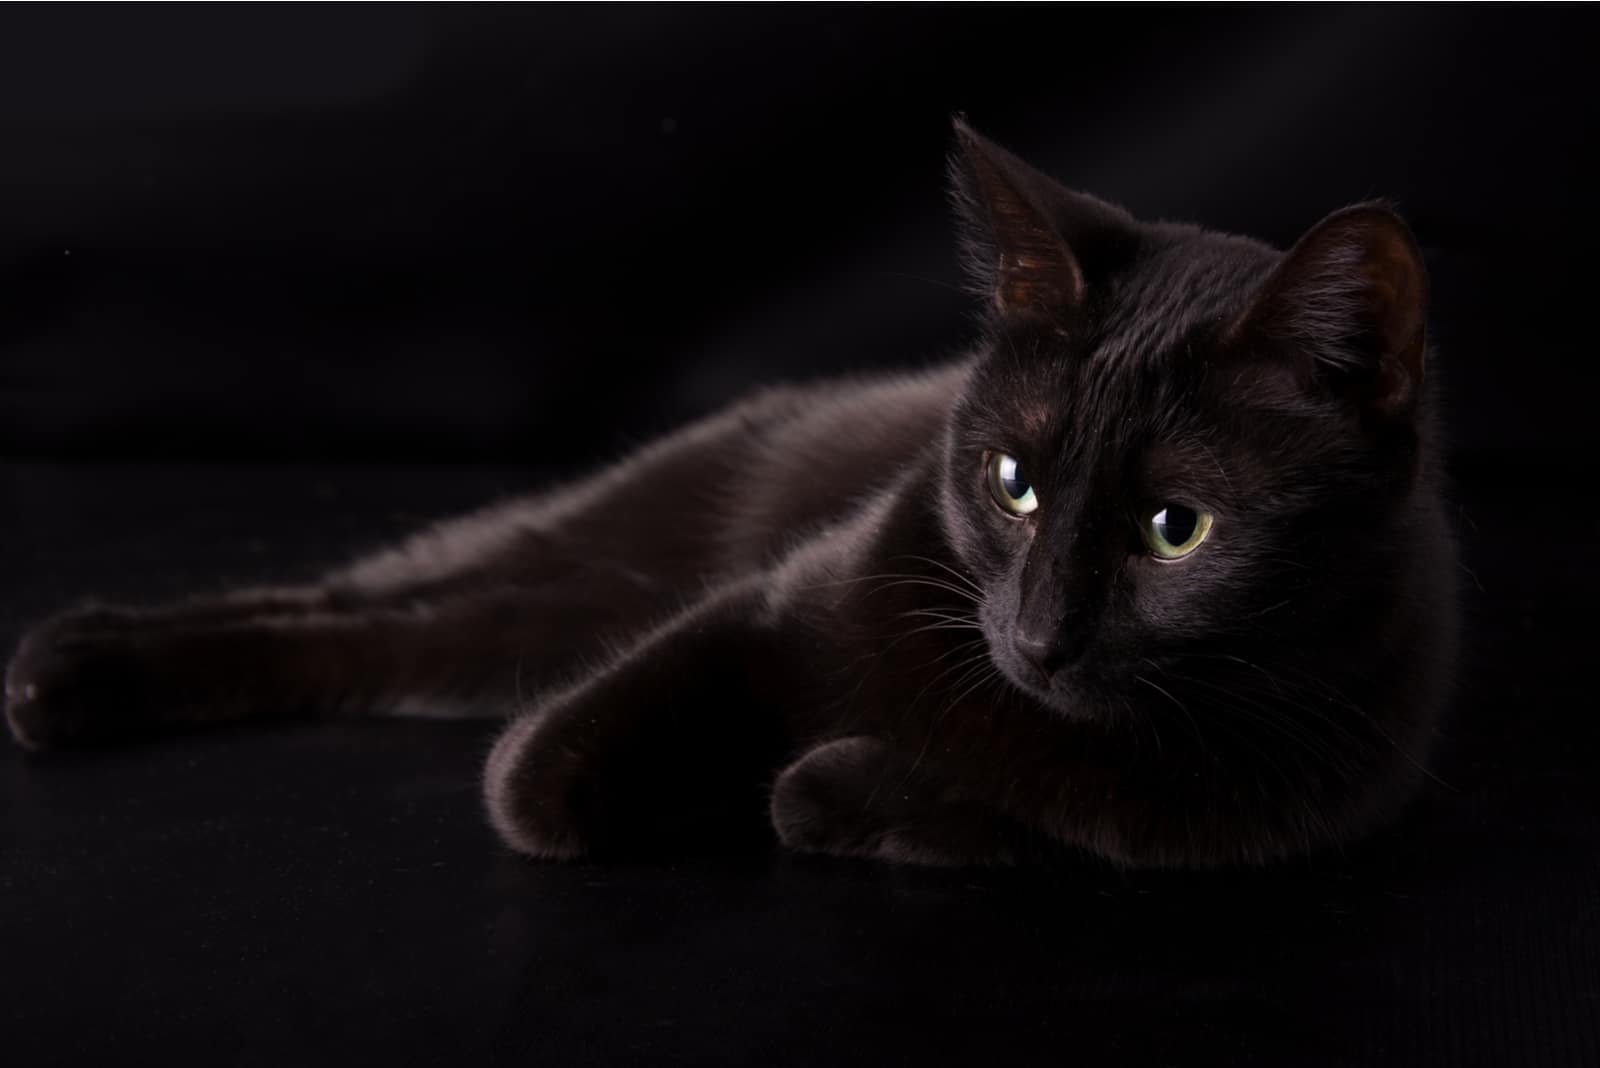 Black cat resting against dark background